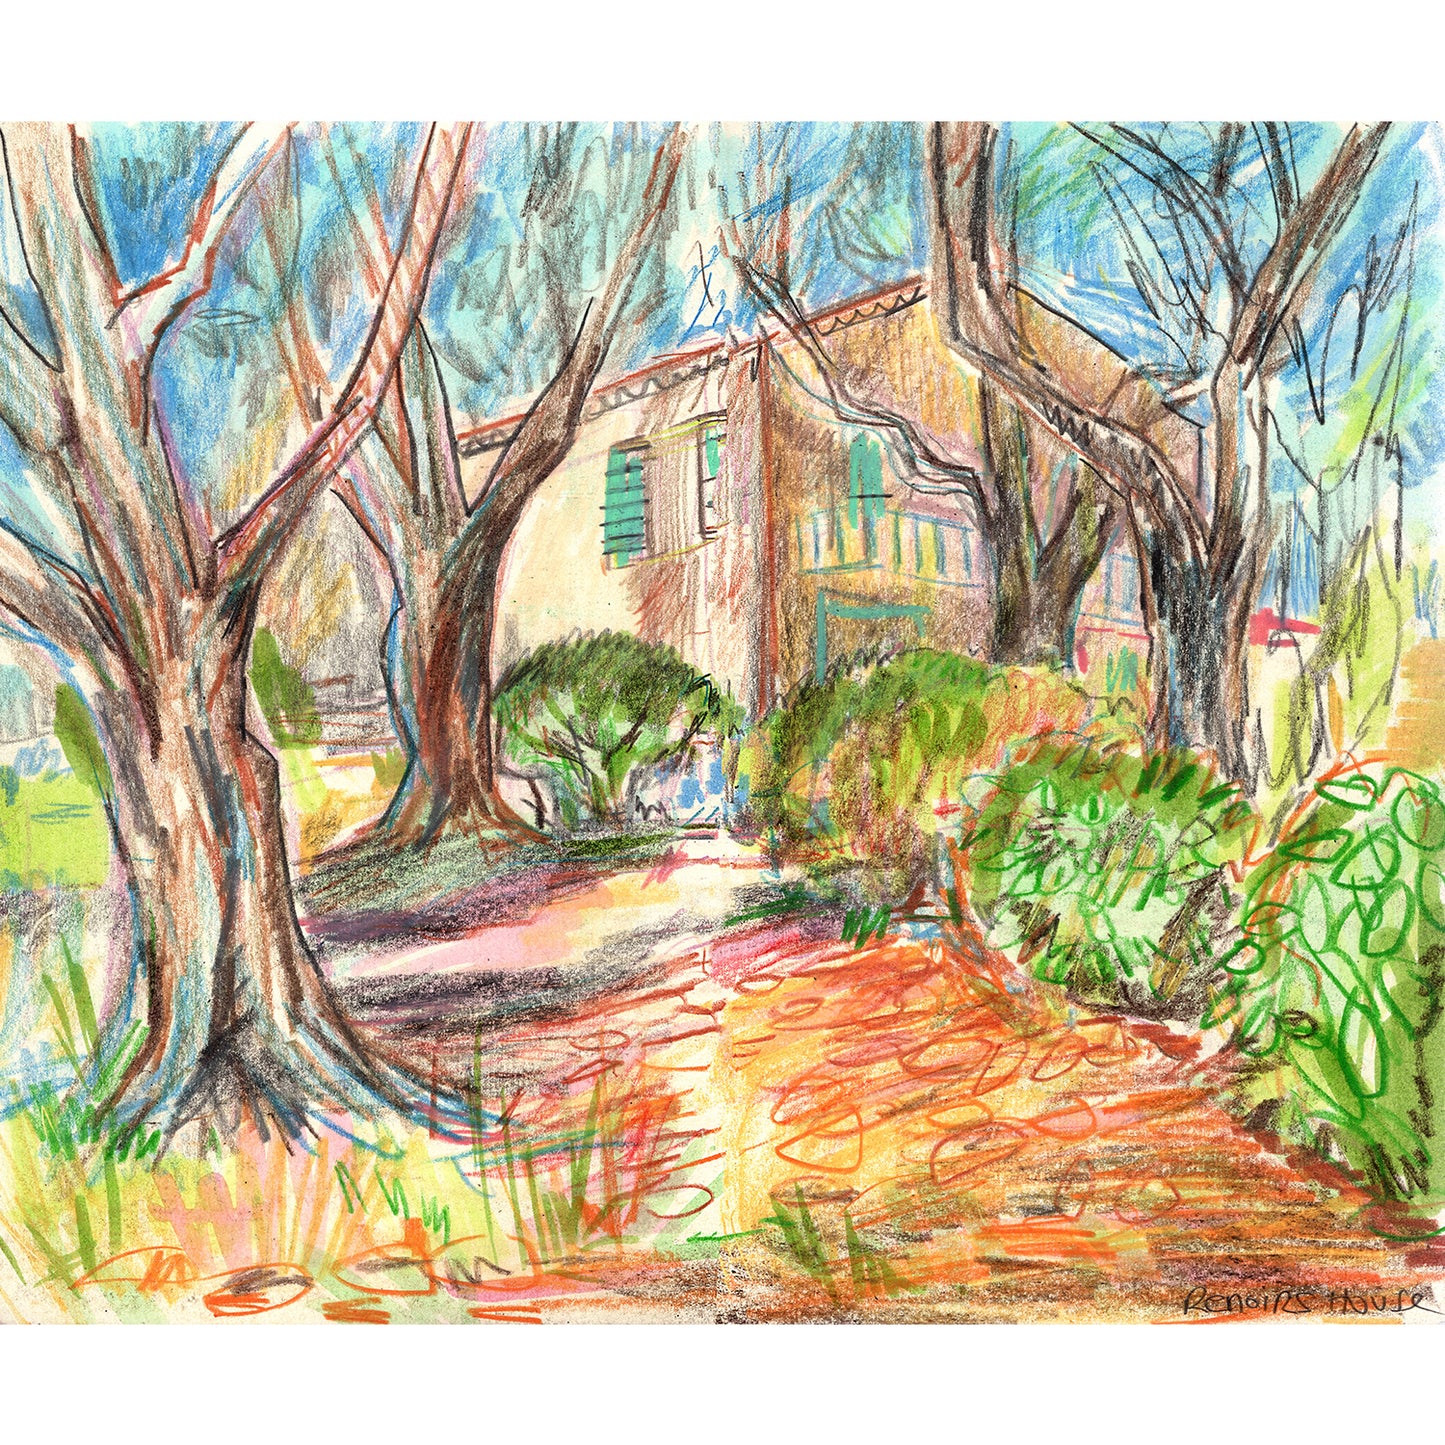 Cagnes-Sur-Mer, Renoir's garden